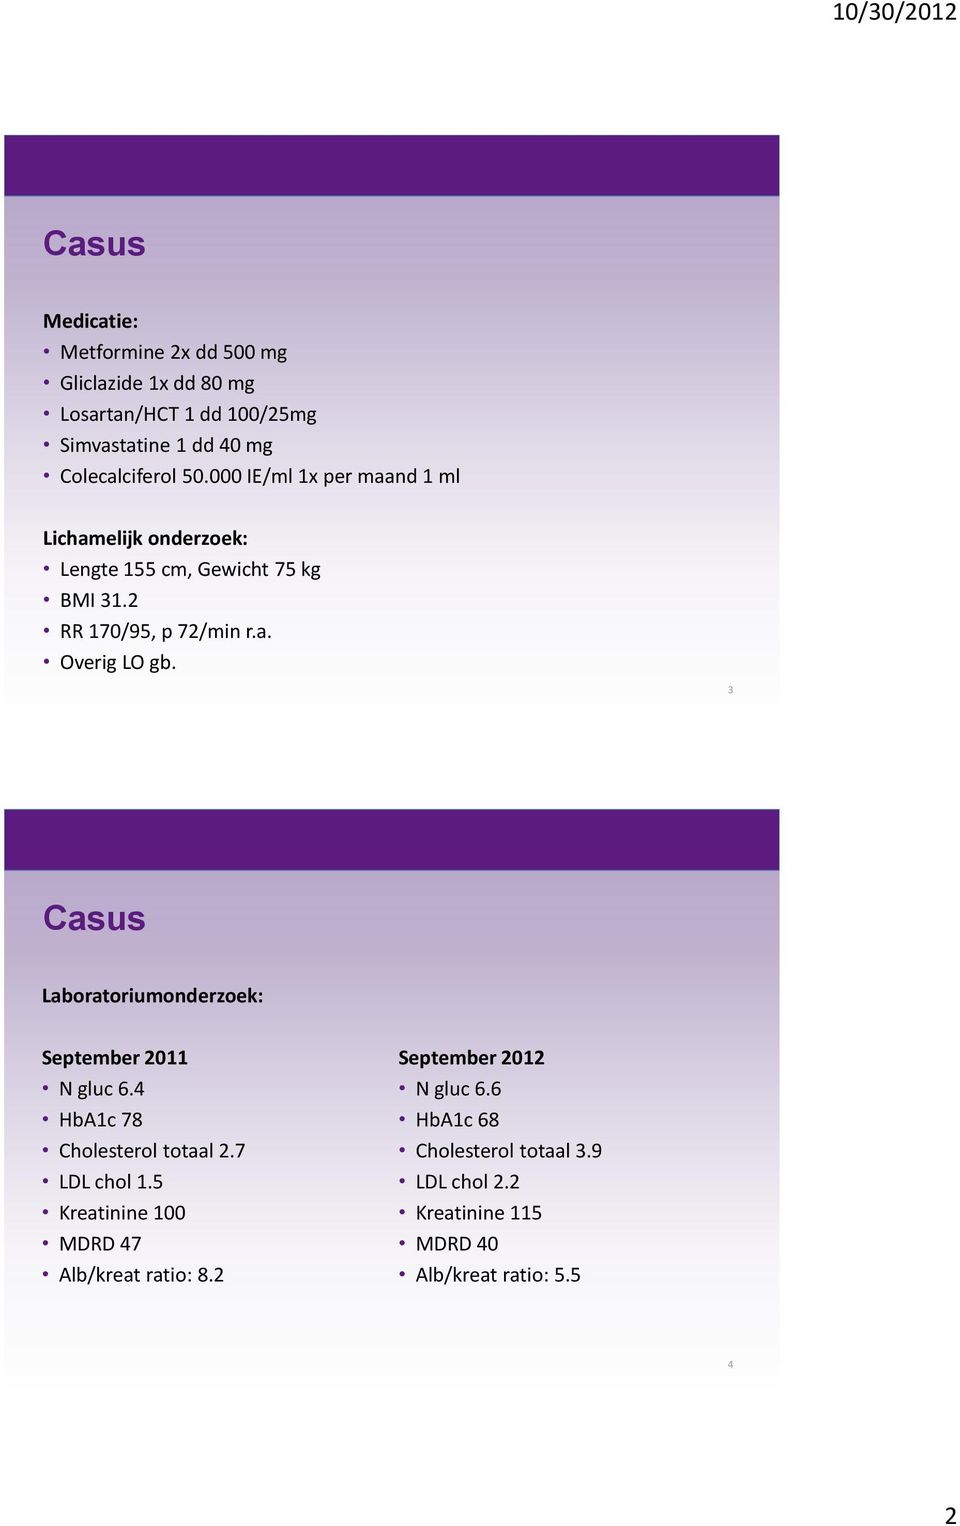 3 Laboratoriumonderzoek: September 2011 N gluc 6.4 HbA1c 78 Cholesterol totaal 2.7 LDL chol 1.